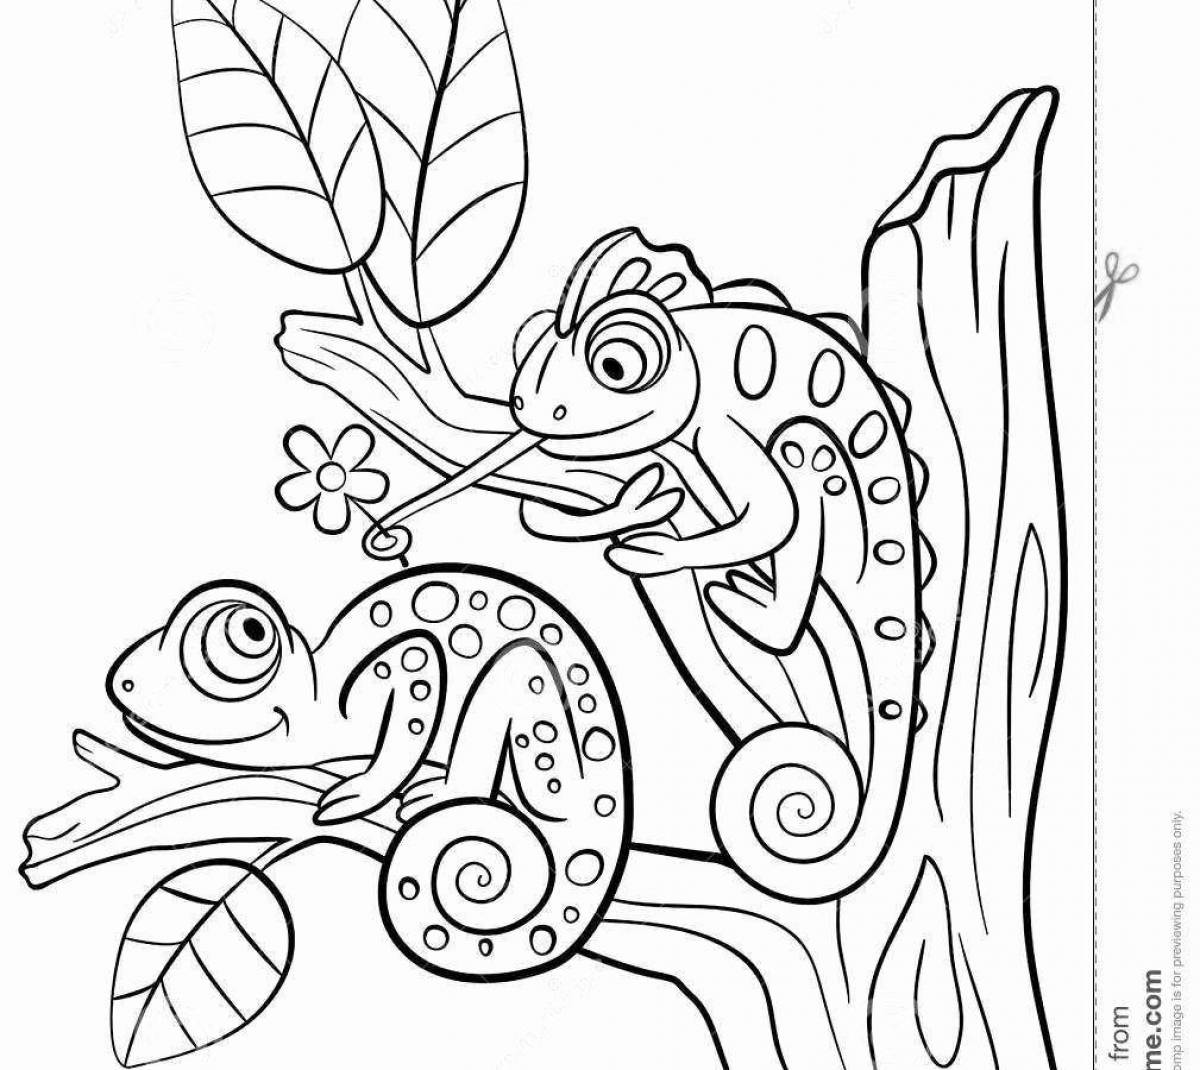 Coloring page joyful chameleon